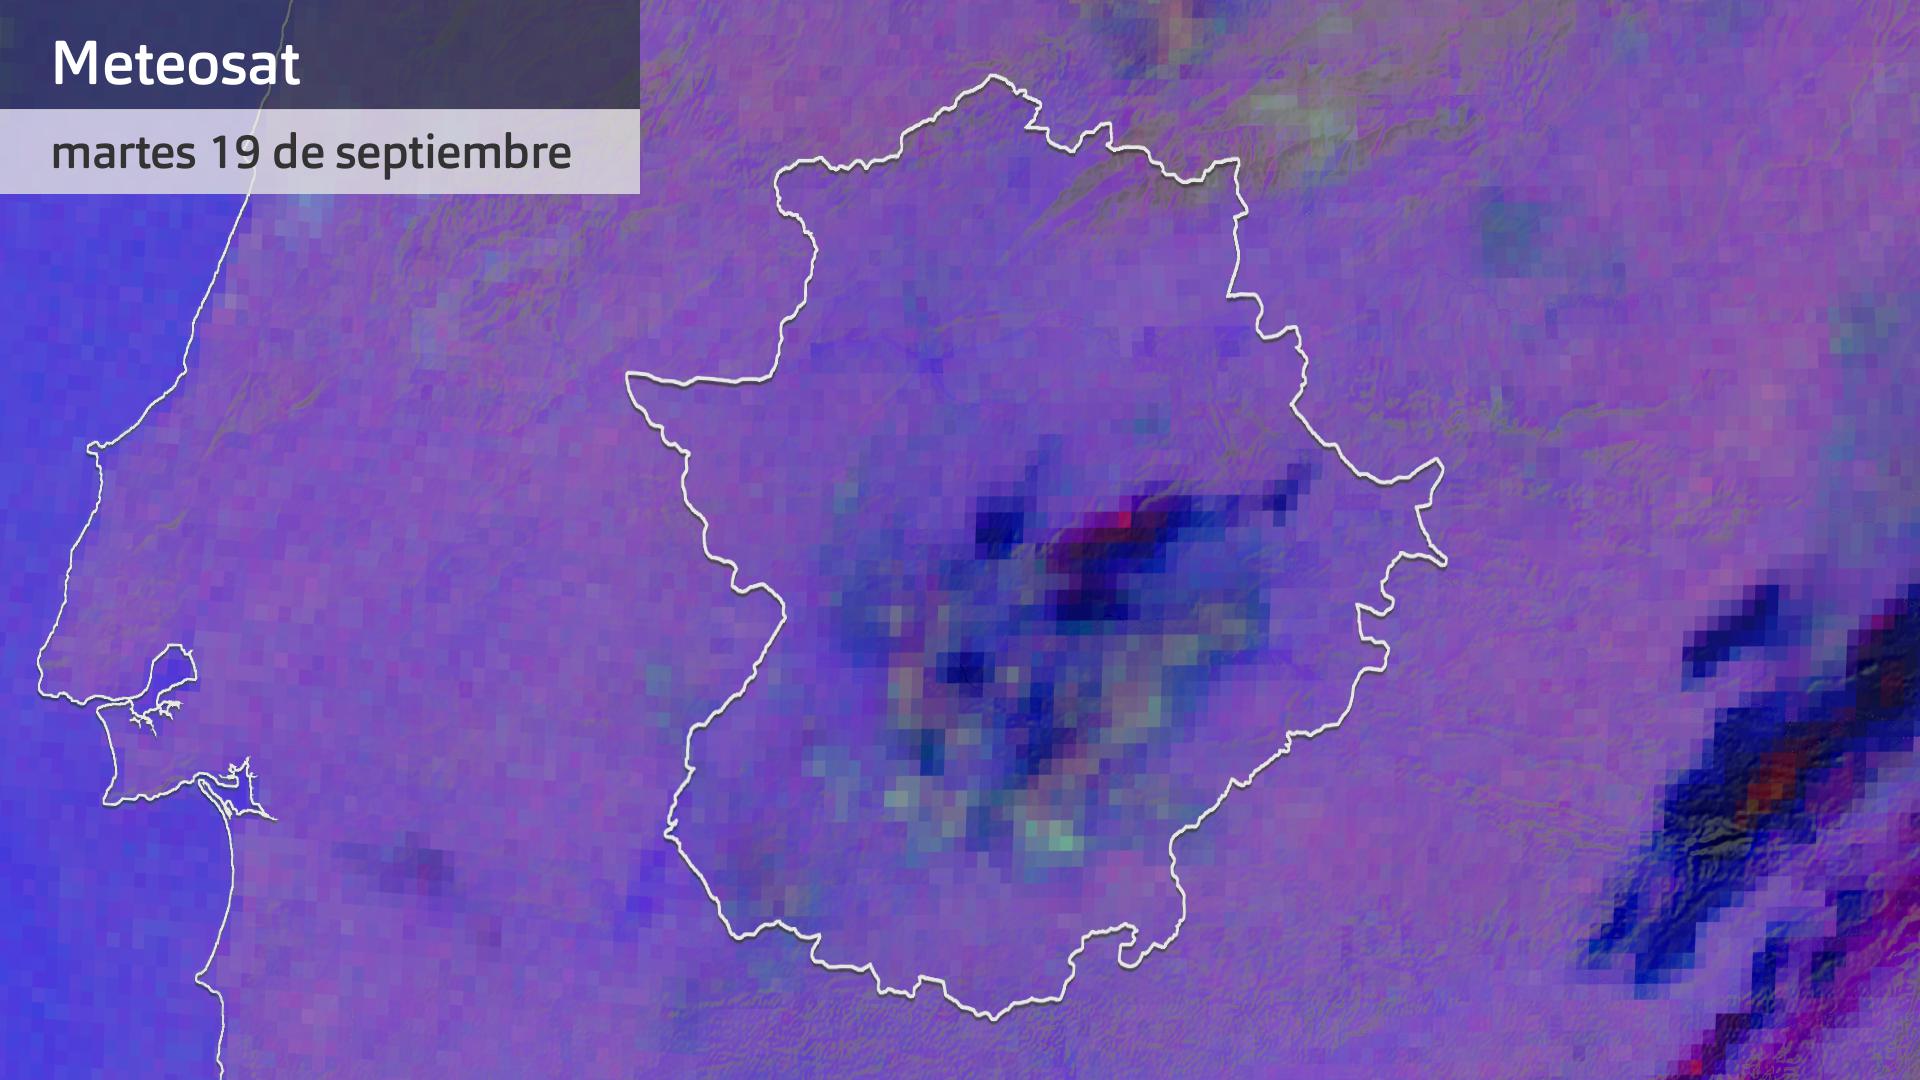 Imagen del Meteosat martes 19 de septiembre 5:15 h.